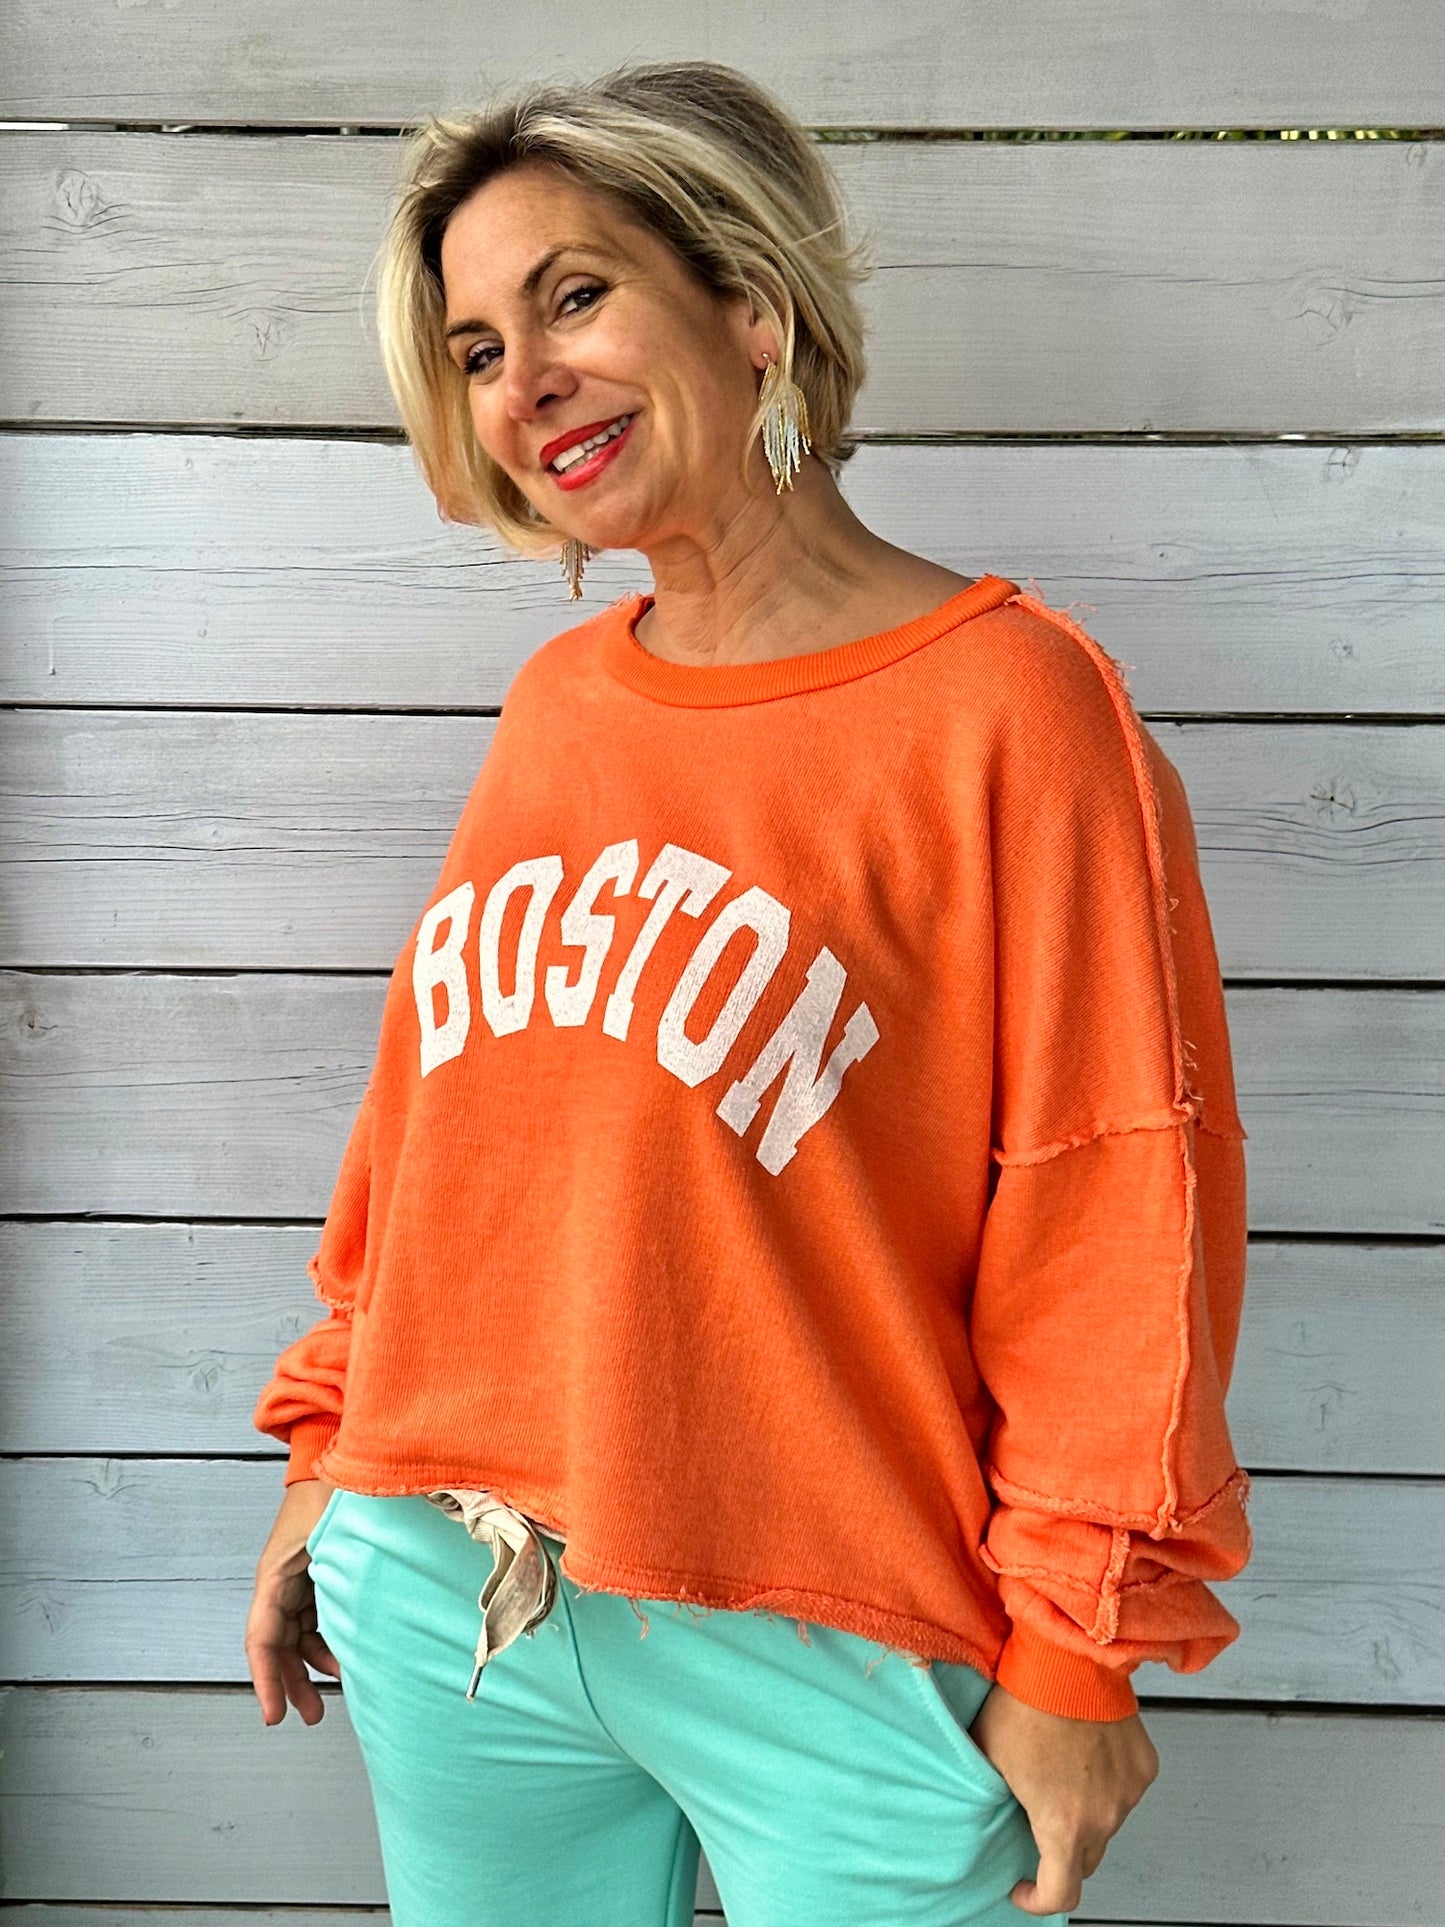 Cropped Sweater "BOSTON" in Sunny Orange